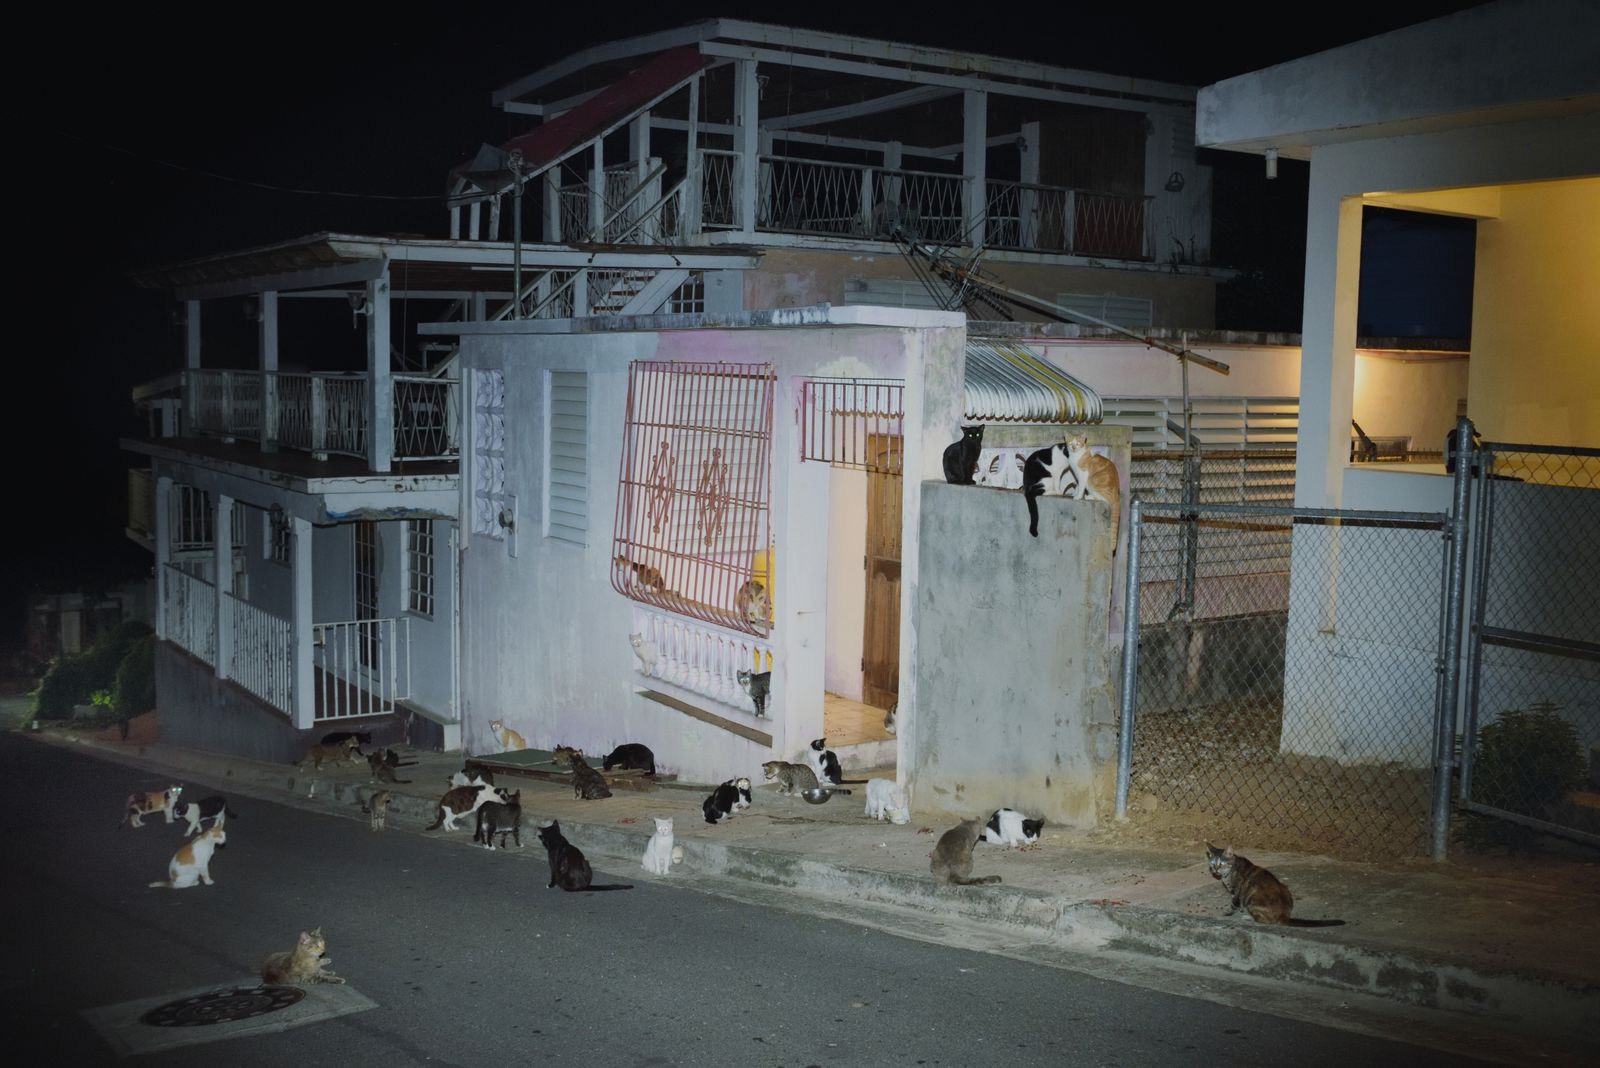 © Annalisa Natali Murri - A street in Isabel II village, Vieques